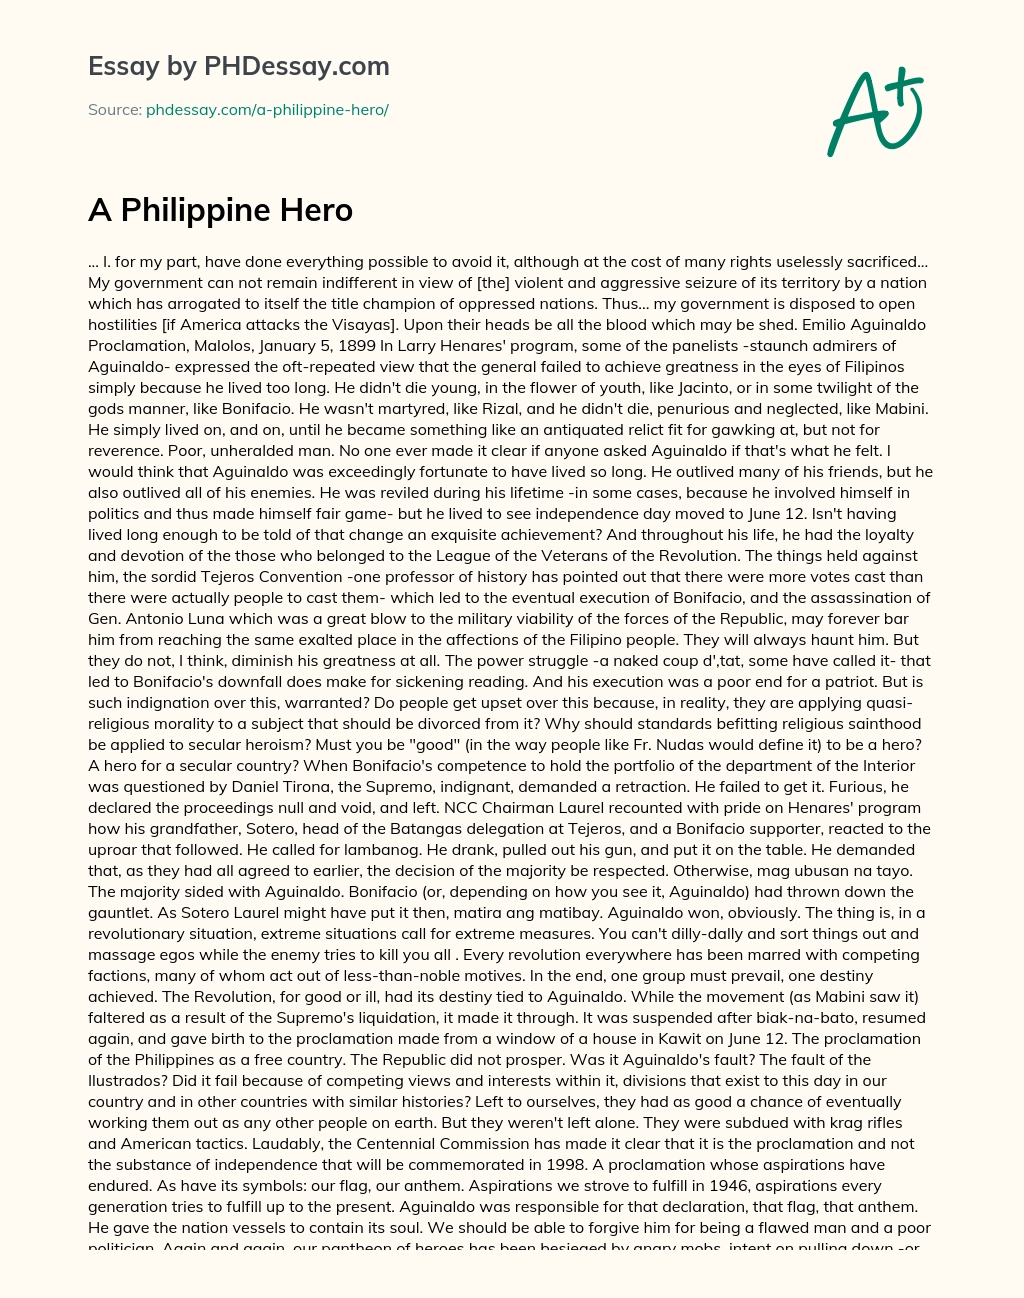 A Philippine Hero essay